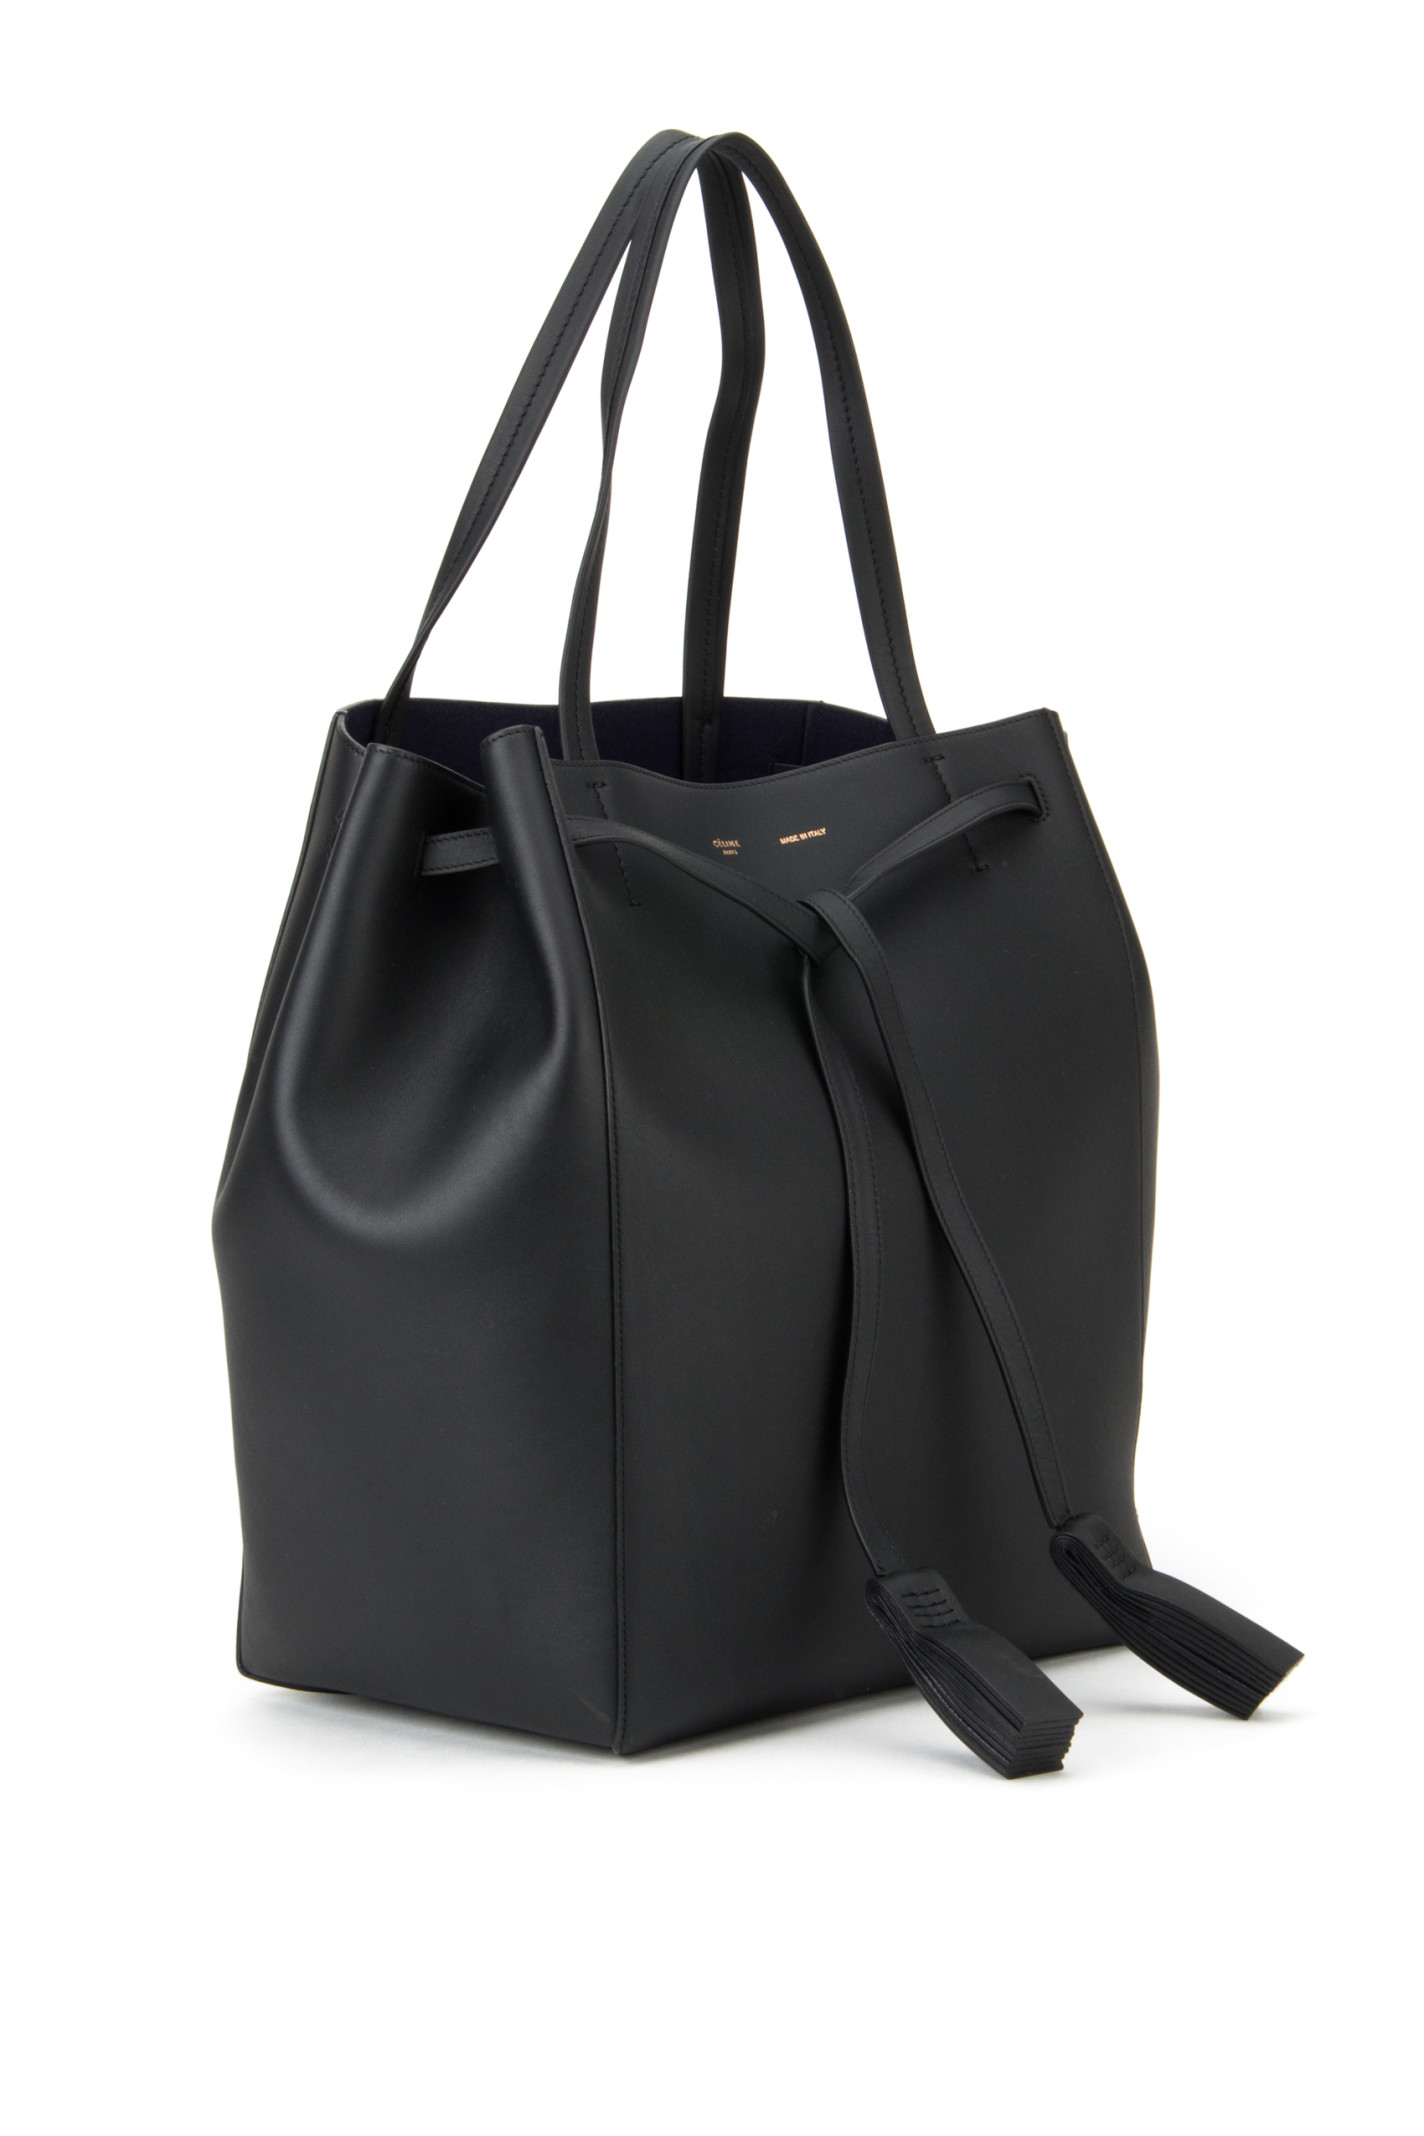 celine-black-medium-cabas-phantom-bag-with-tassel-product-0-551675865-normal.jpeg  